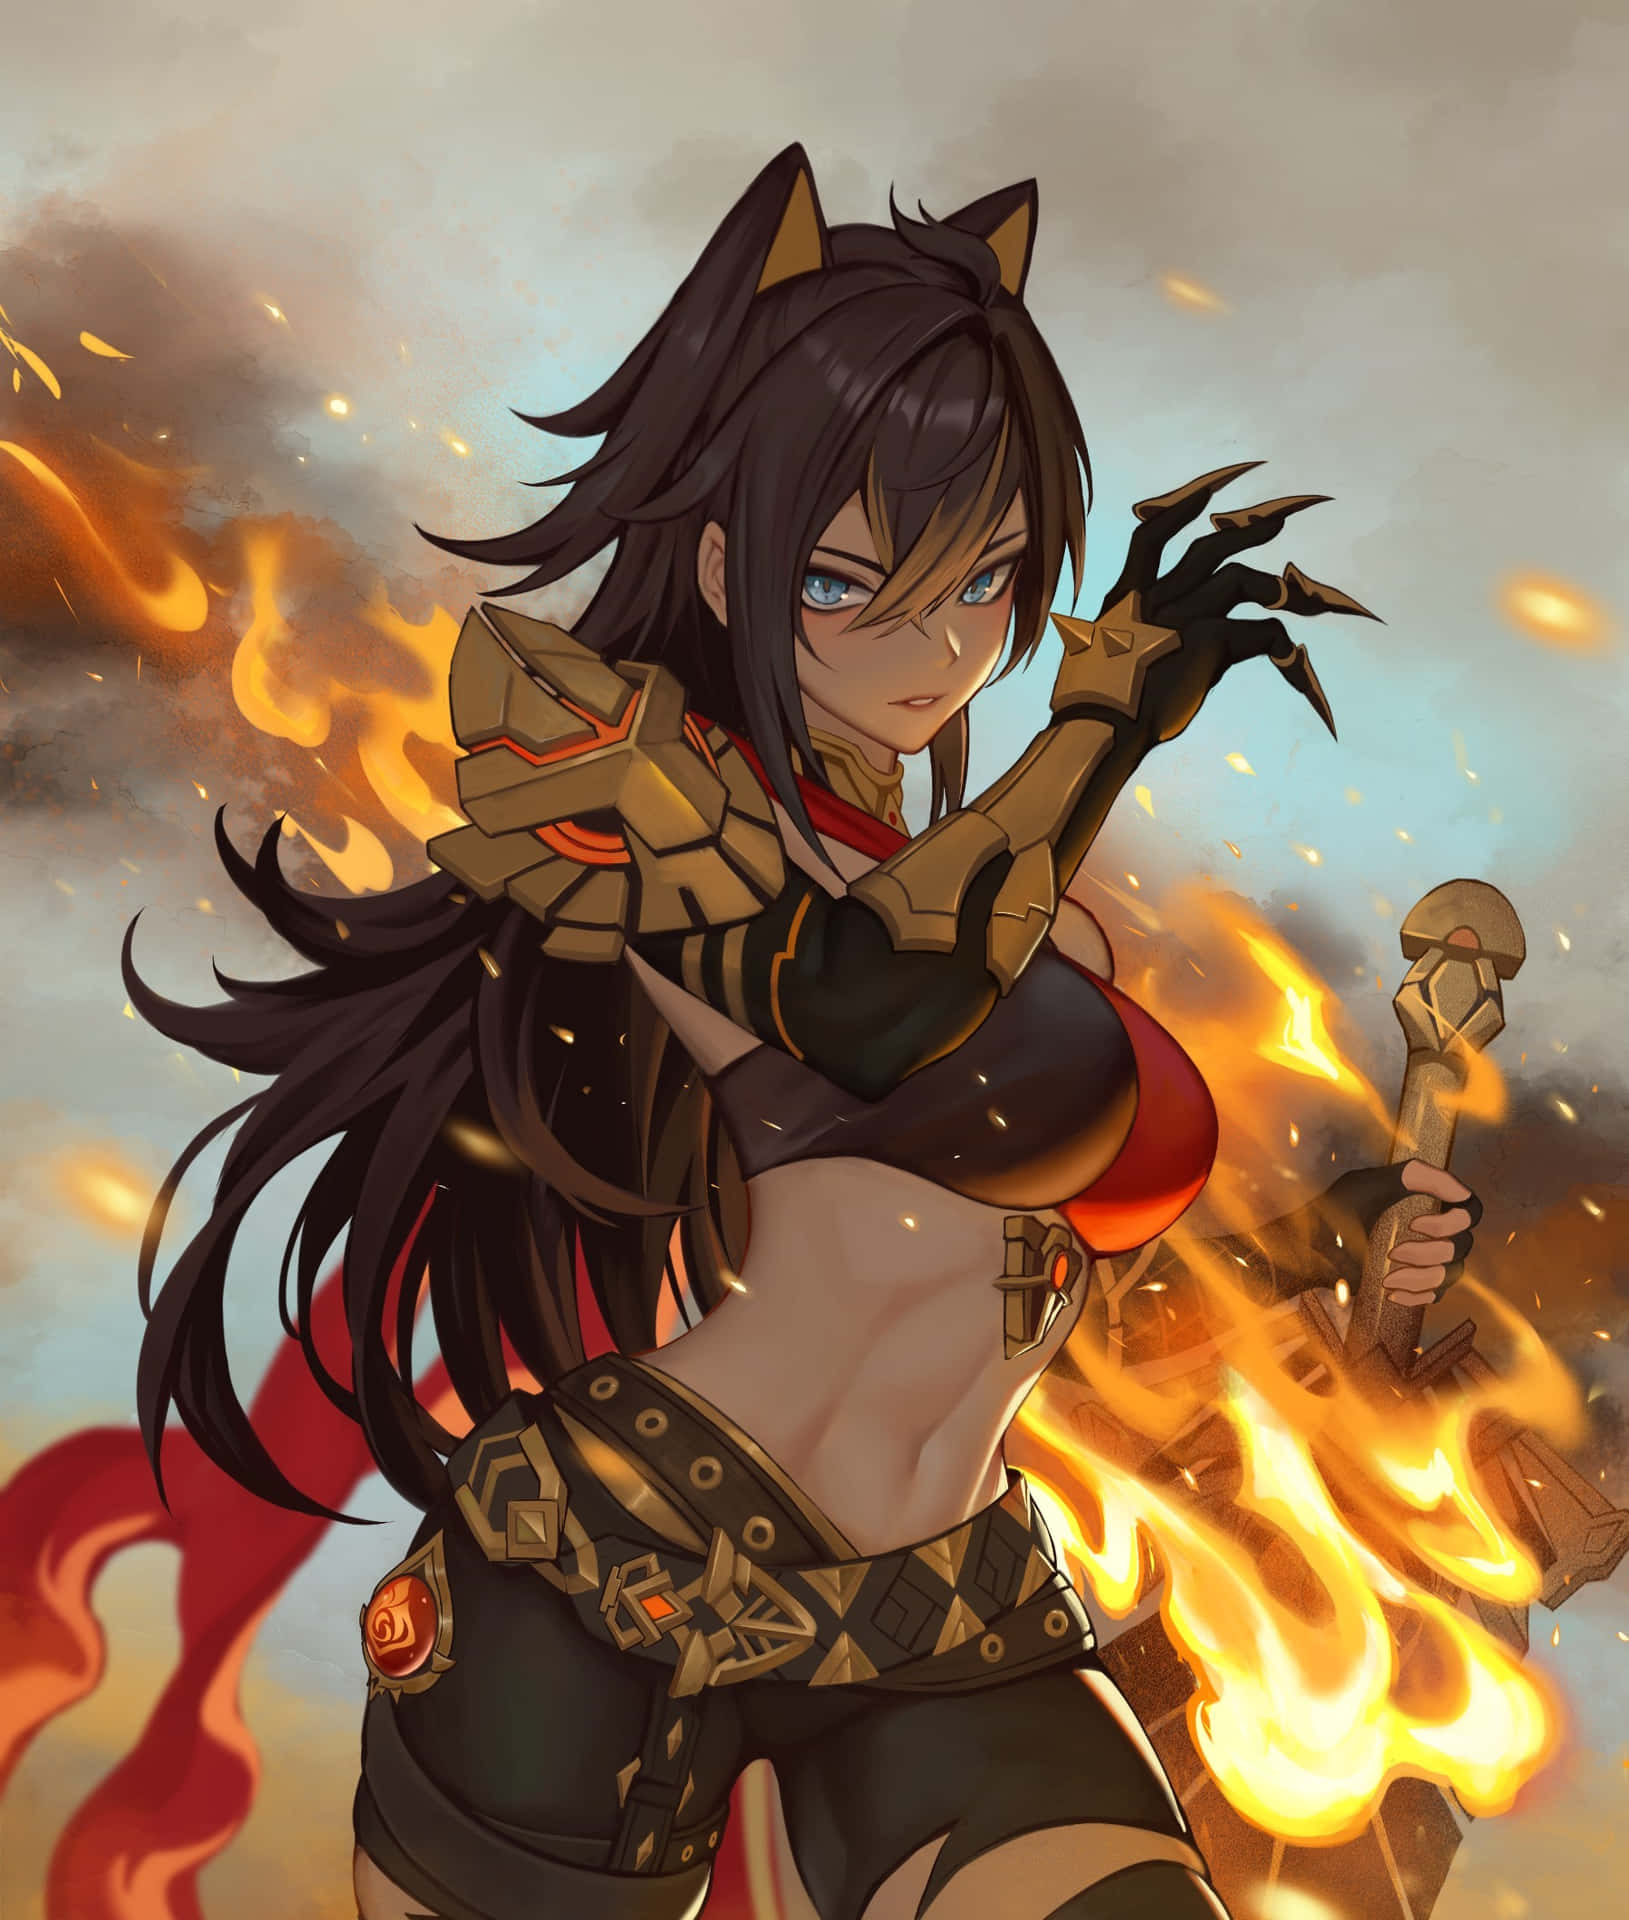 Flame Wielder Anime Character Wallpaper